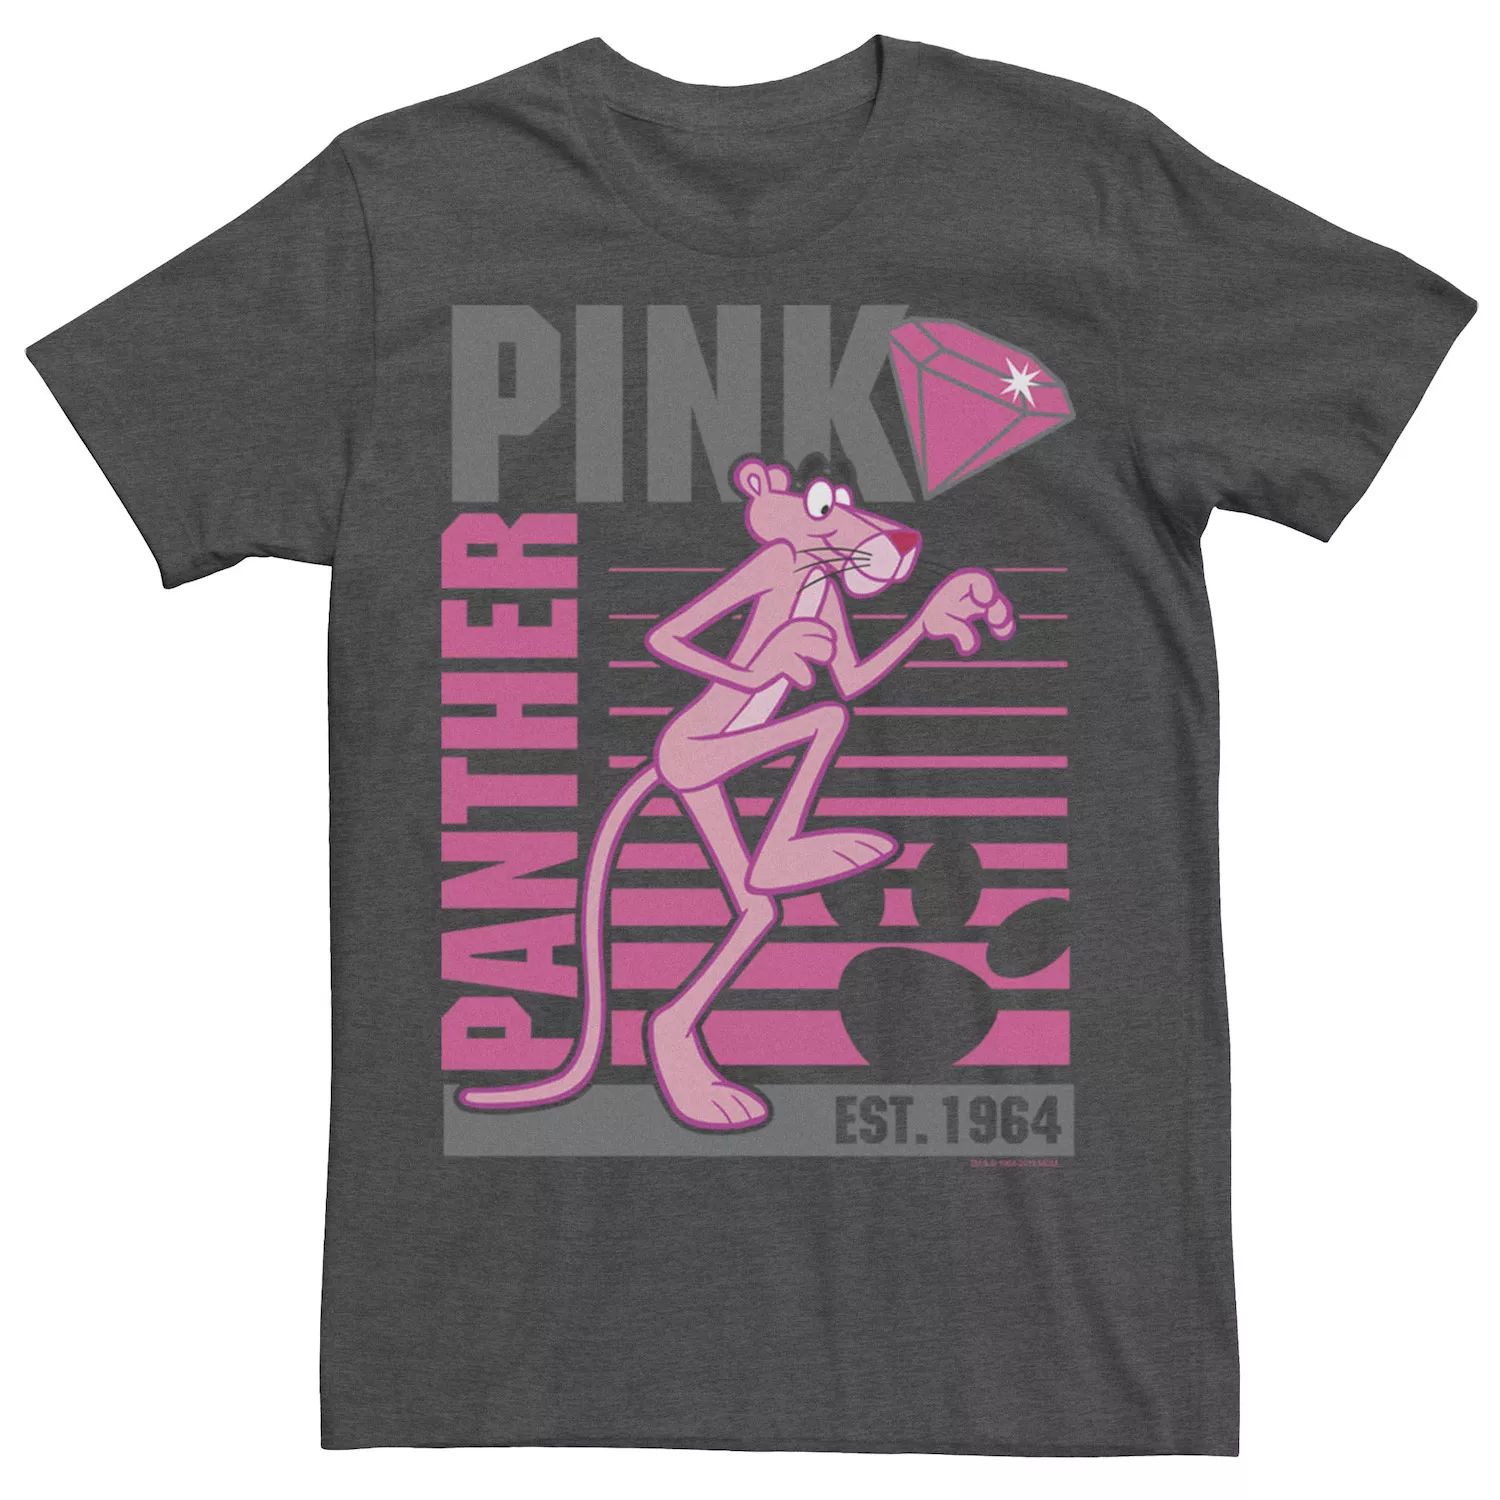 Мужская футболка с портретом на подкладке из розовой пантеры Licensed Character пульт pduspb htr d18a hob491 для akai haier polar